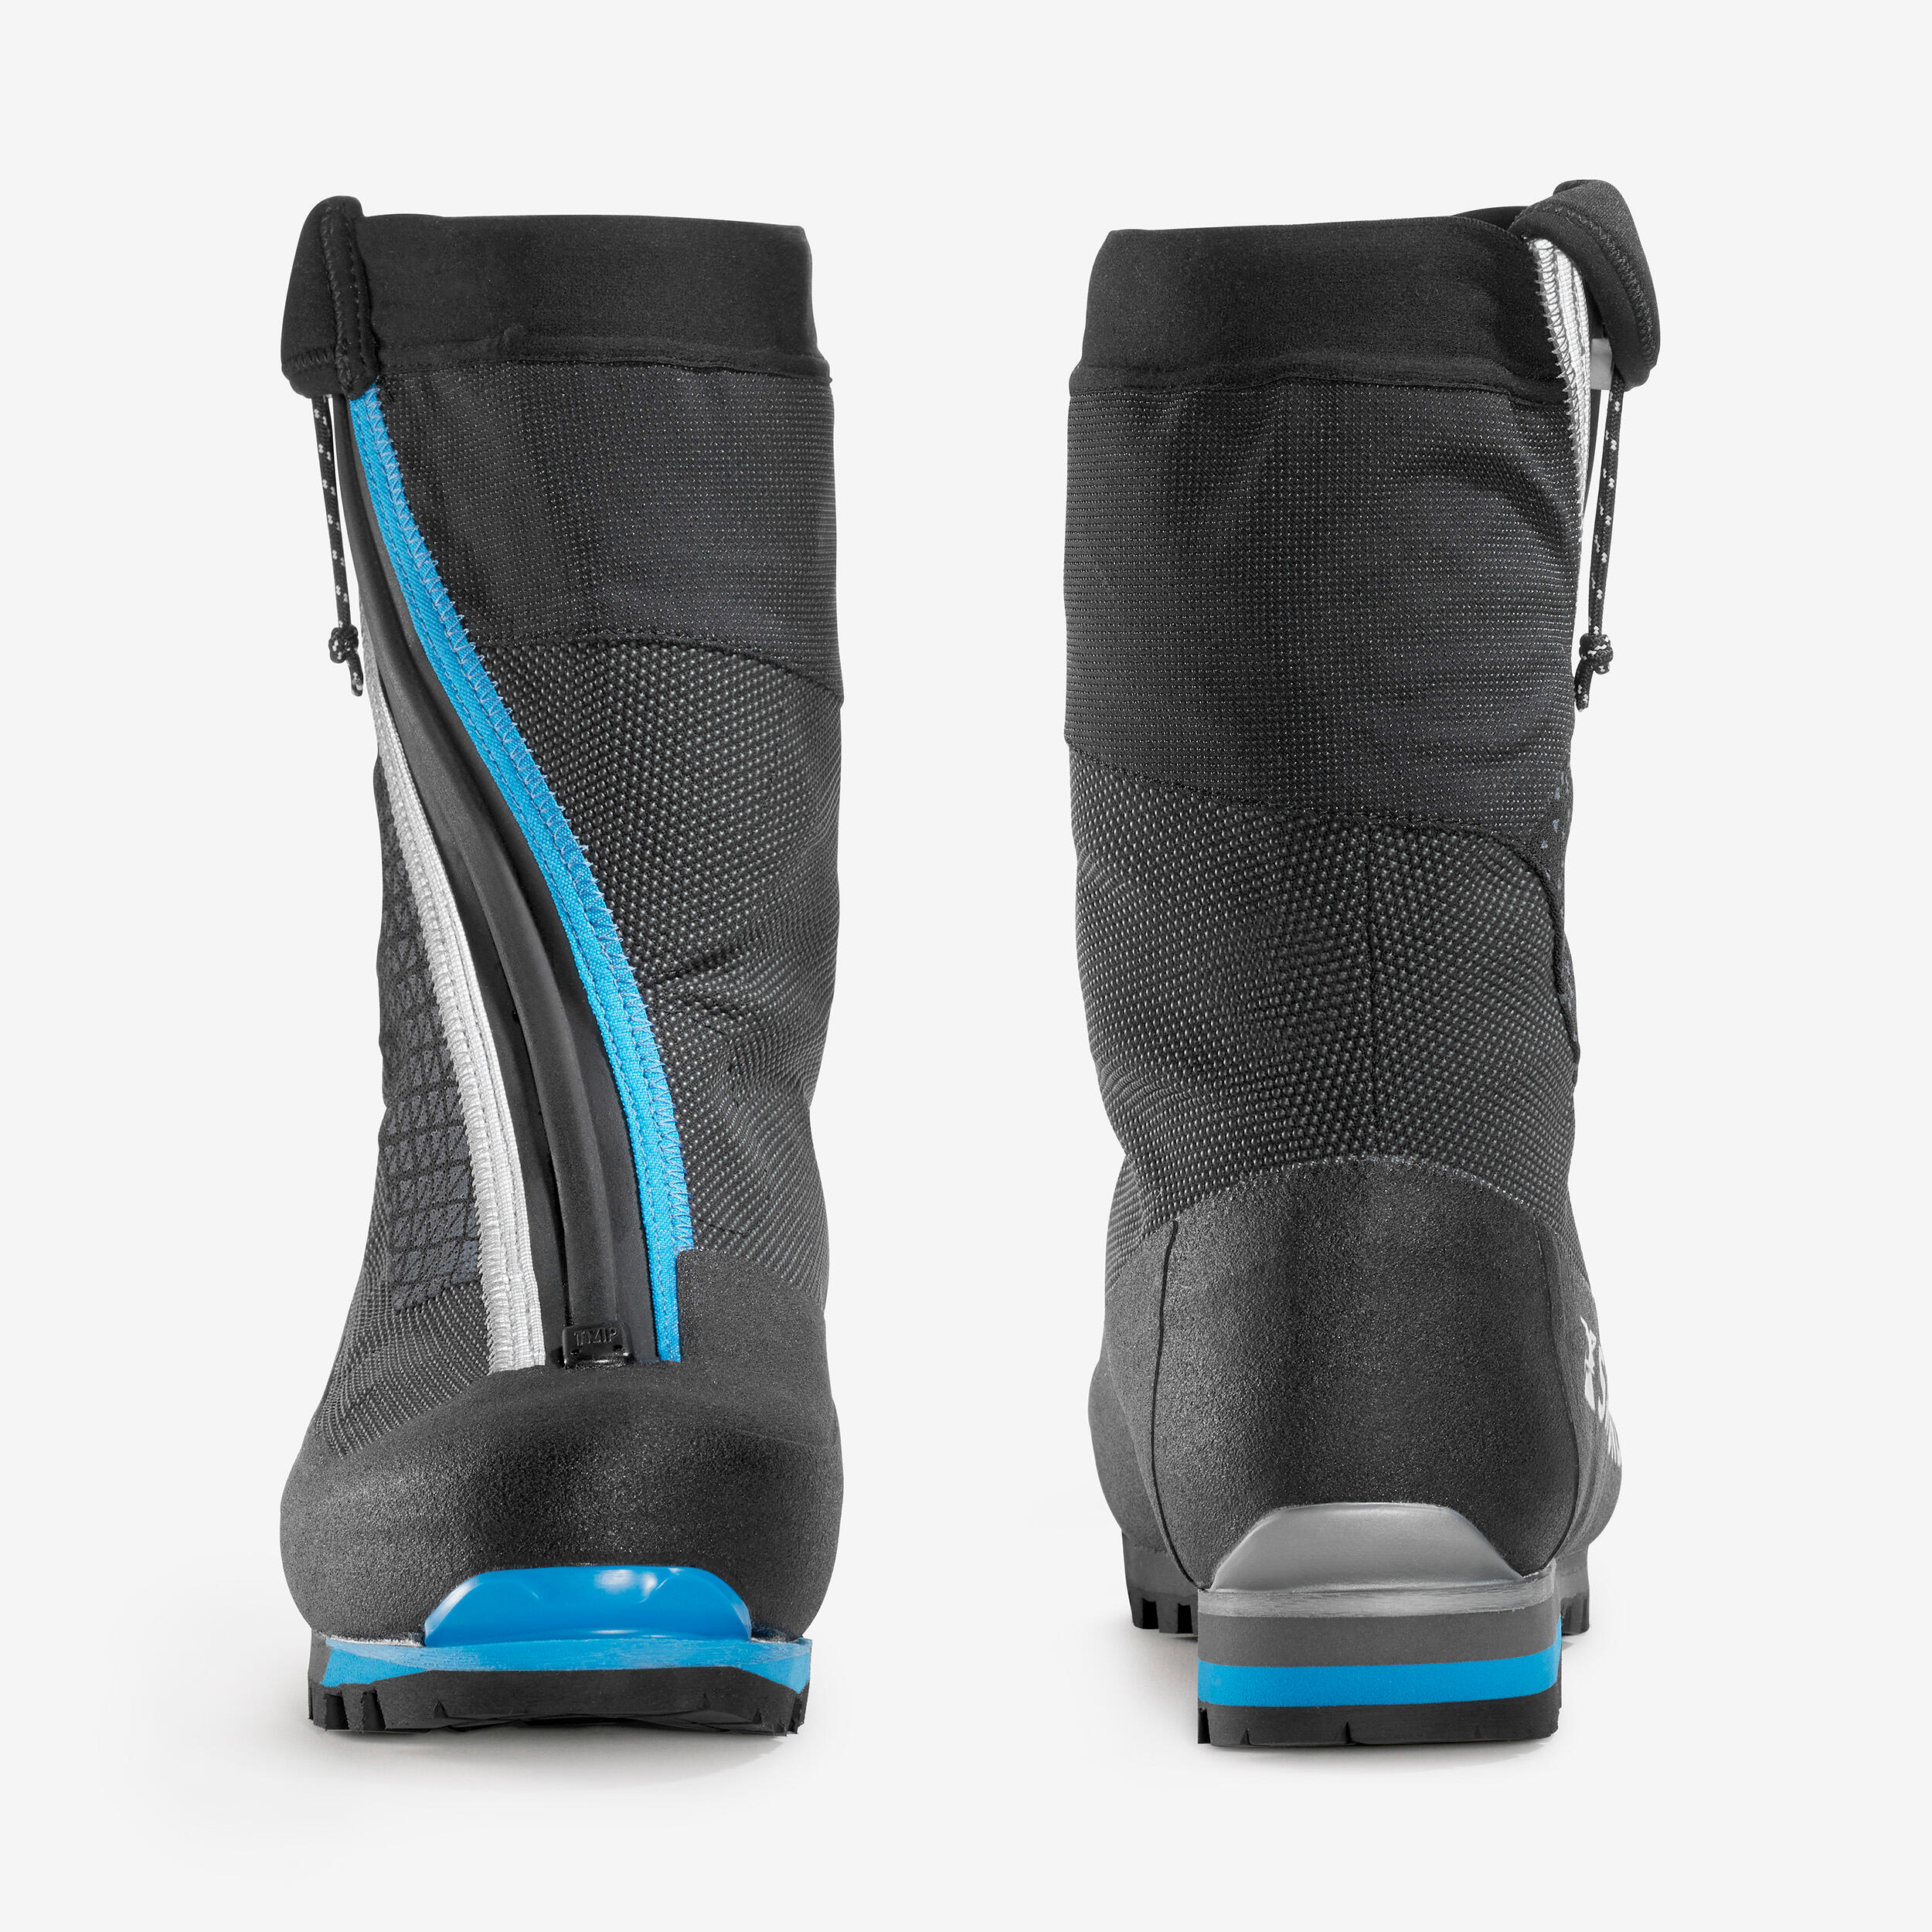 All-season mountaineering boots - ICE Blue/Black 4/12